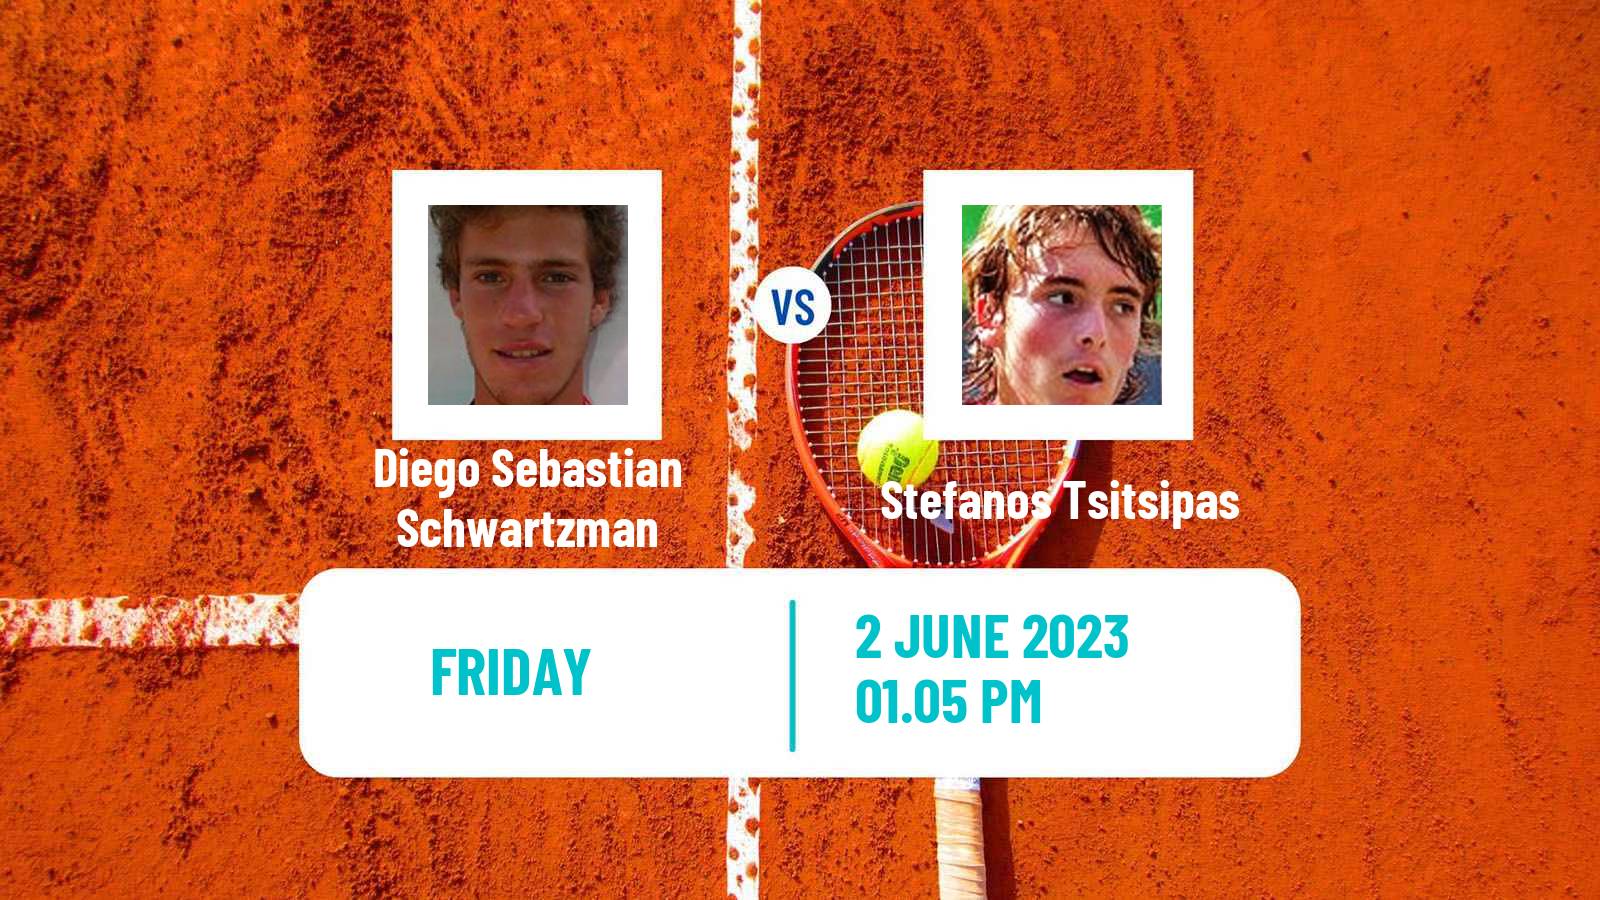 Tennis ATP Roland Garros Diego Sebastian Schwartzman - Stefanos Tsitsipas